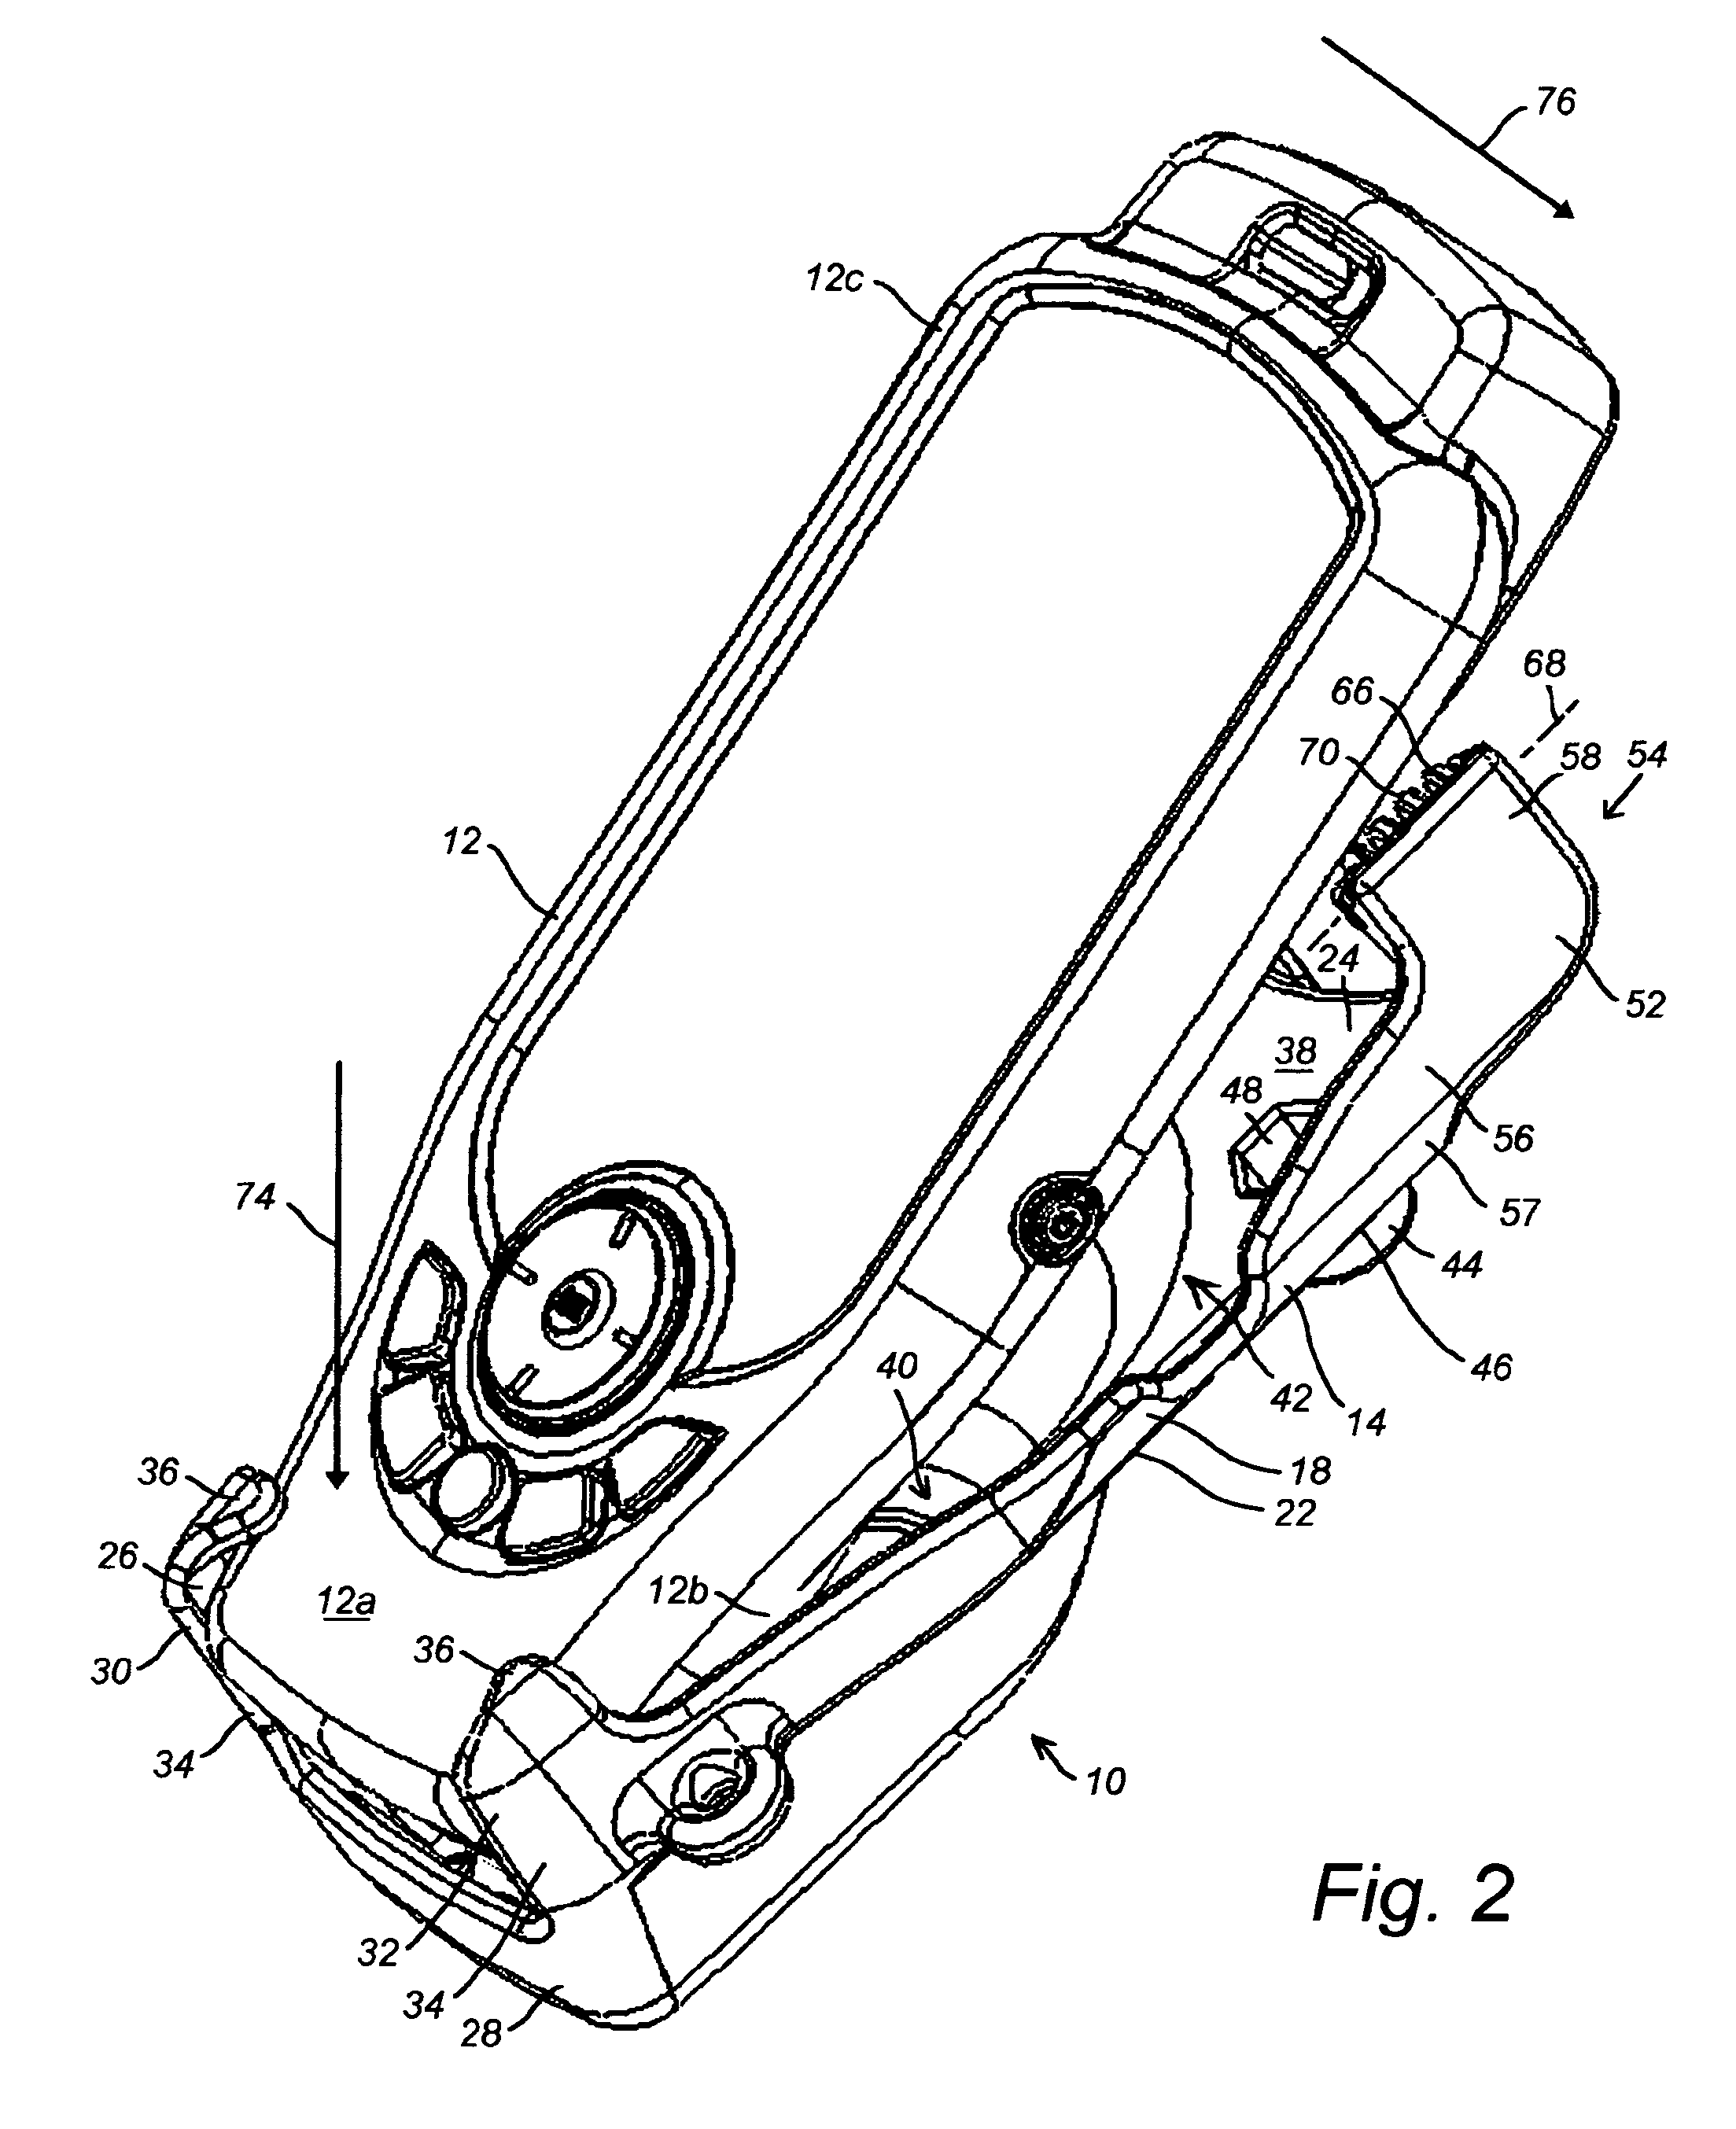 Portable device holder